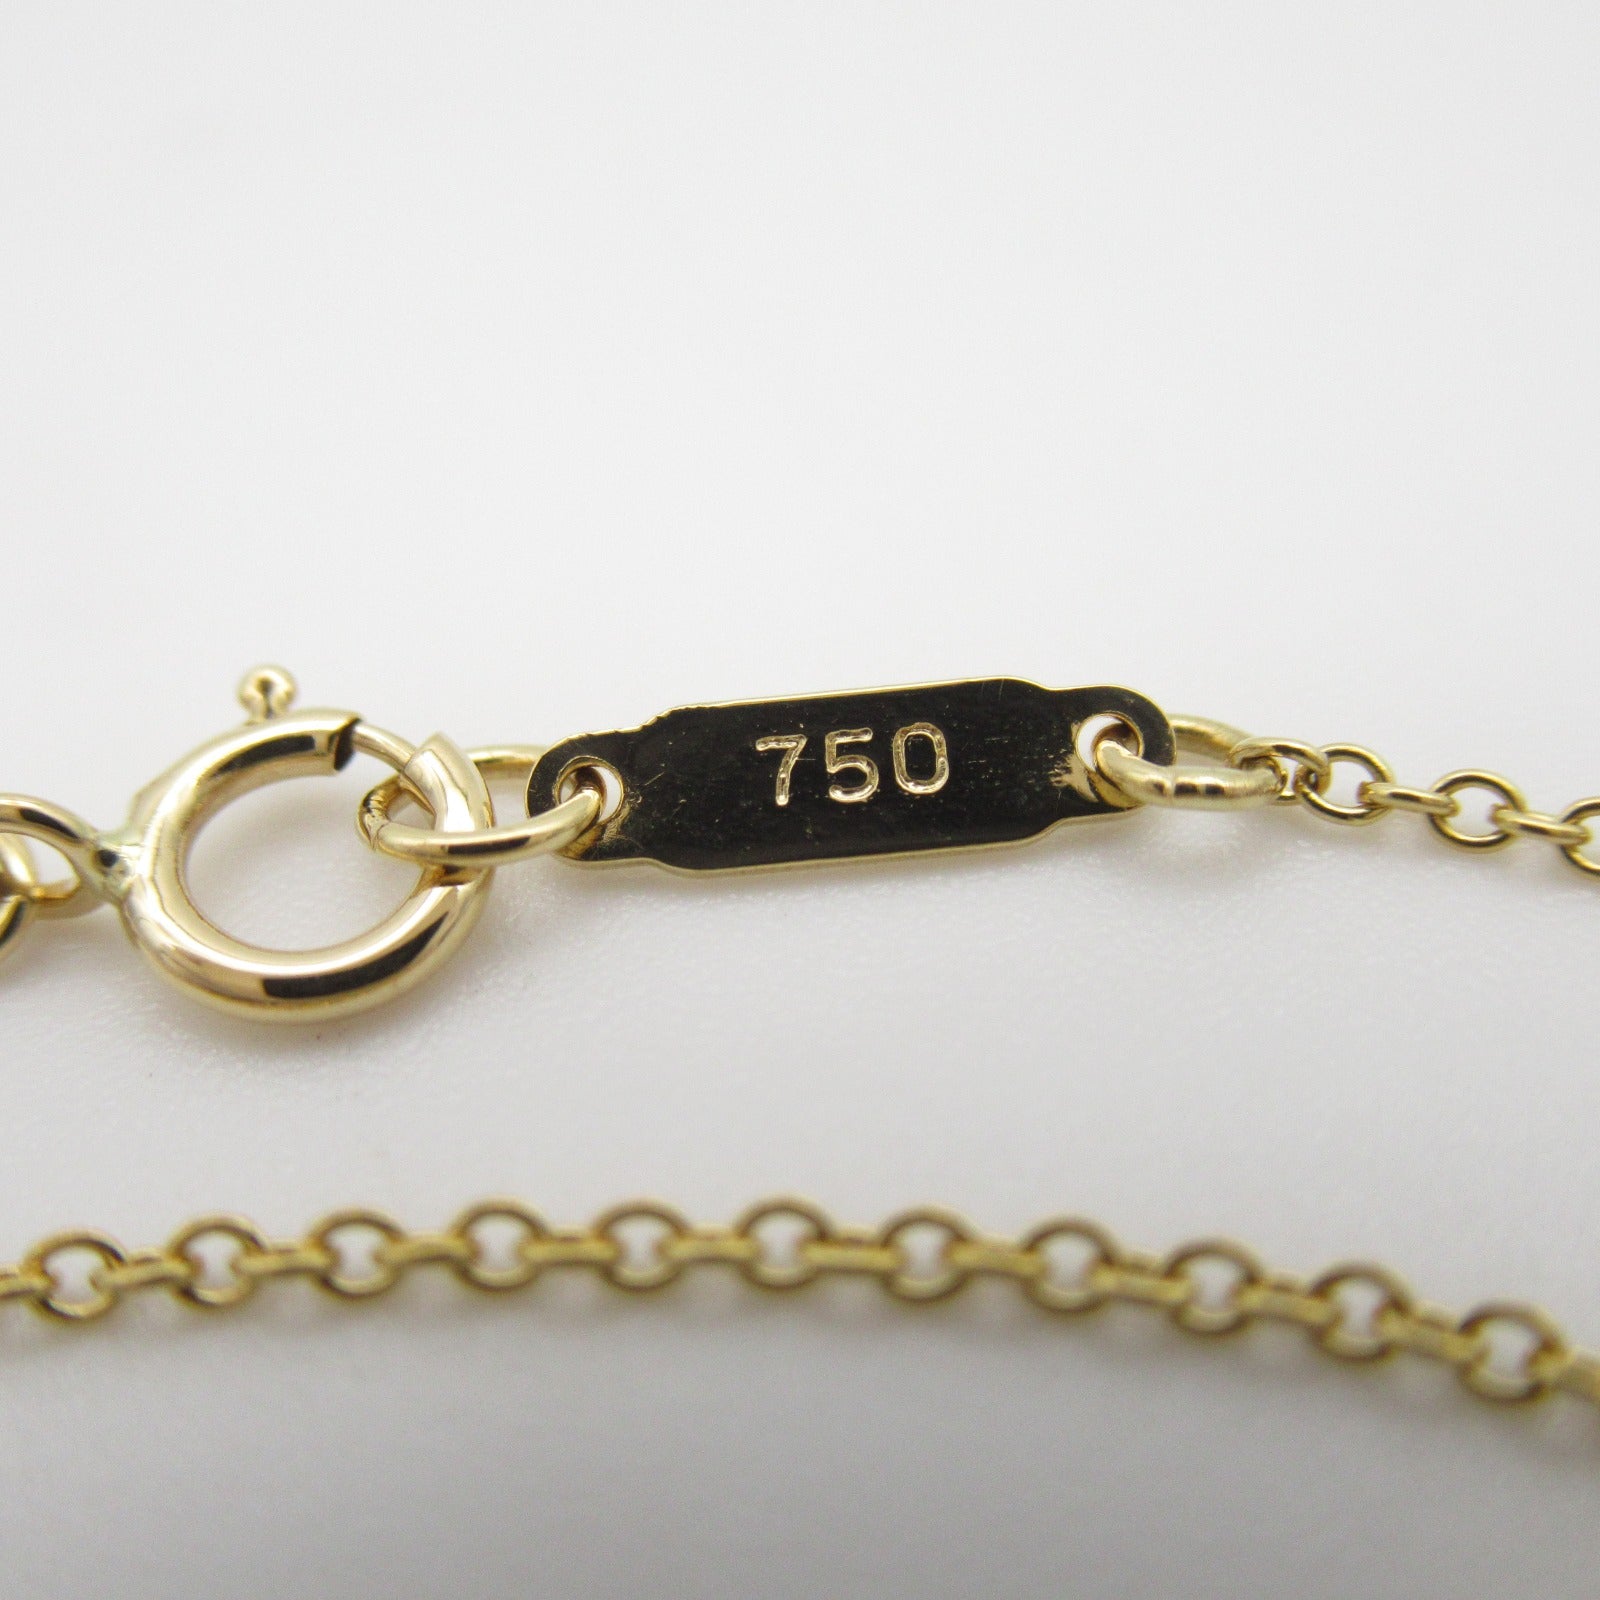 Tiffany TIFFANY&amp;CO Dots Circle Necklace Collar Jewelry Pt950 Platinum K18 (Yellow G) Diamond  Clearance